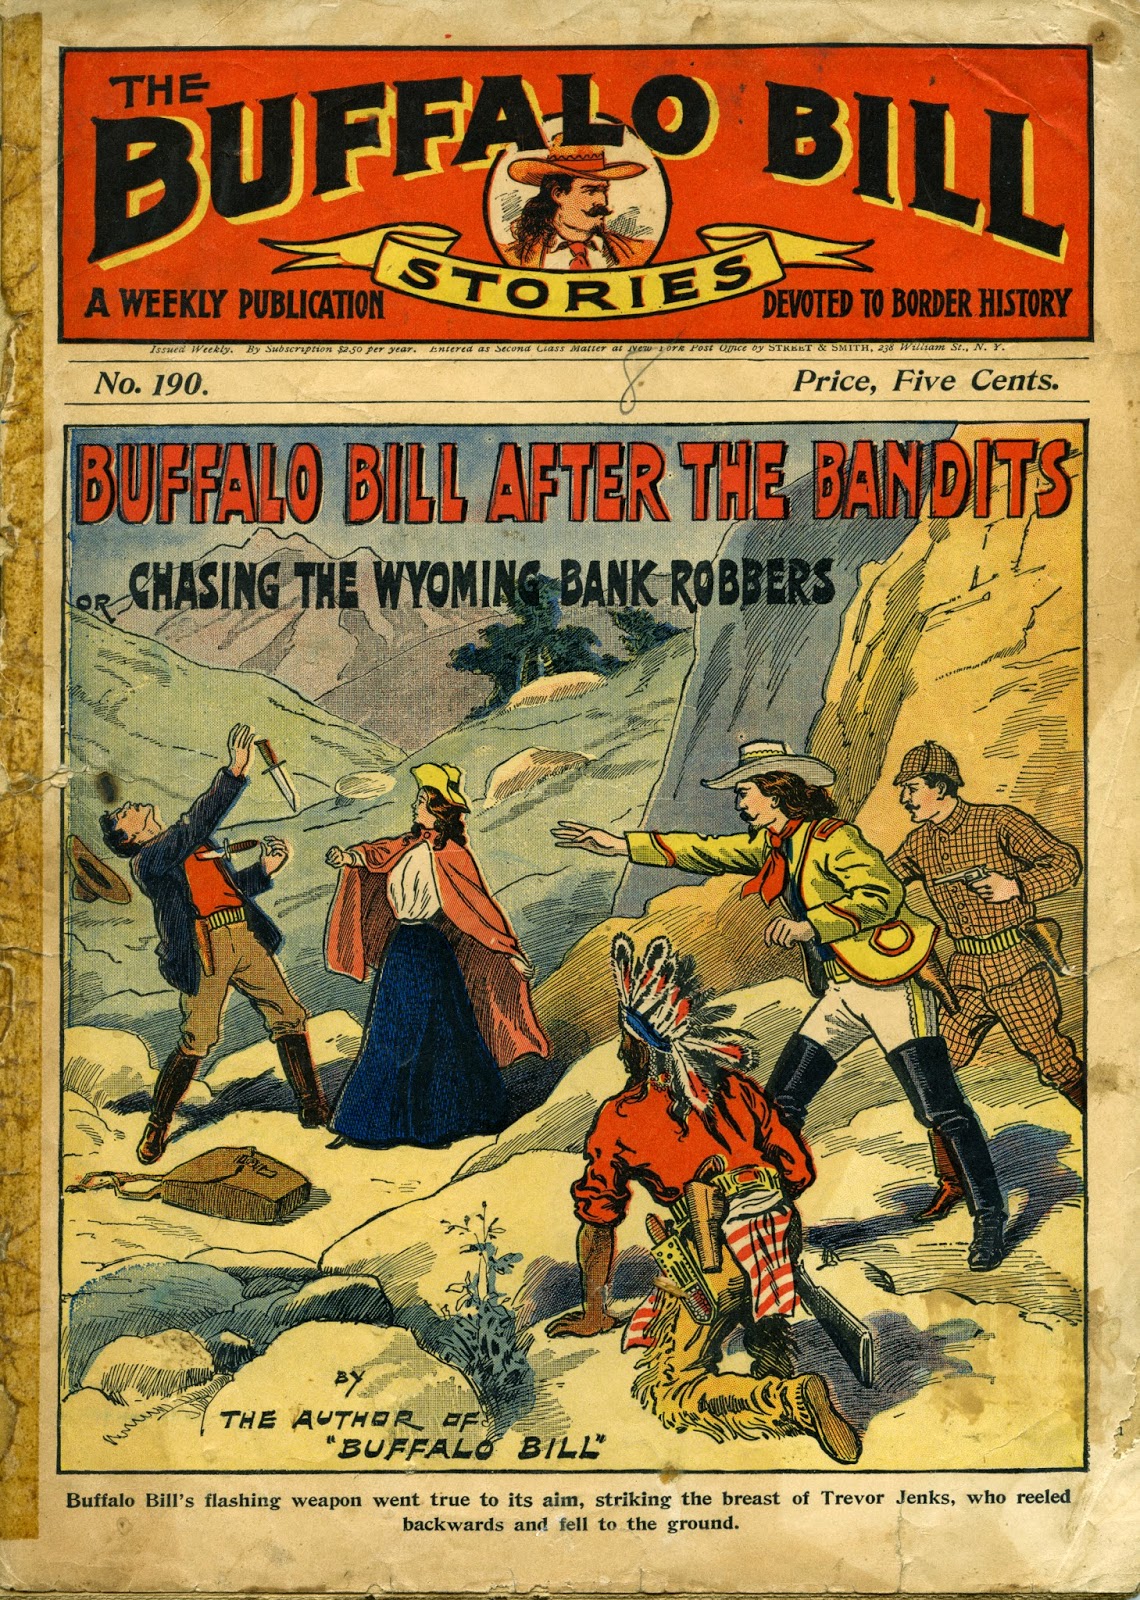 Buffalo Bill Stories